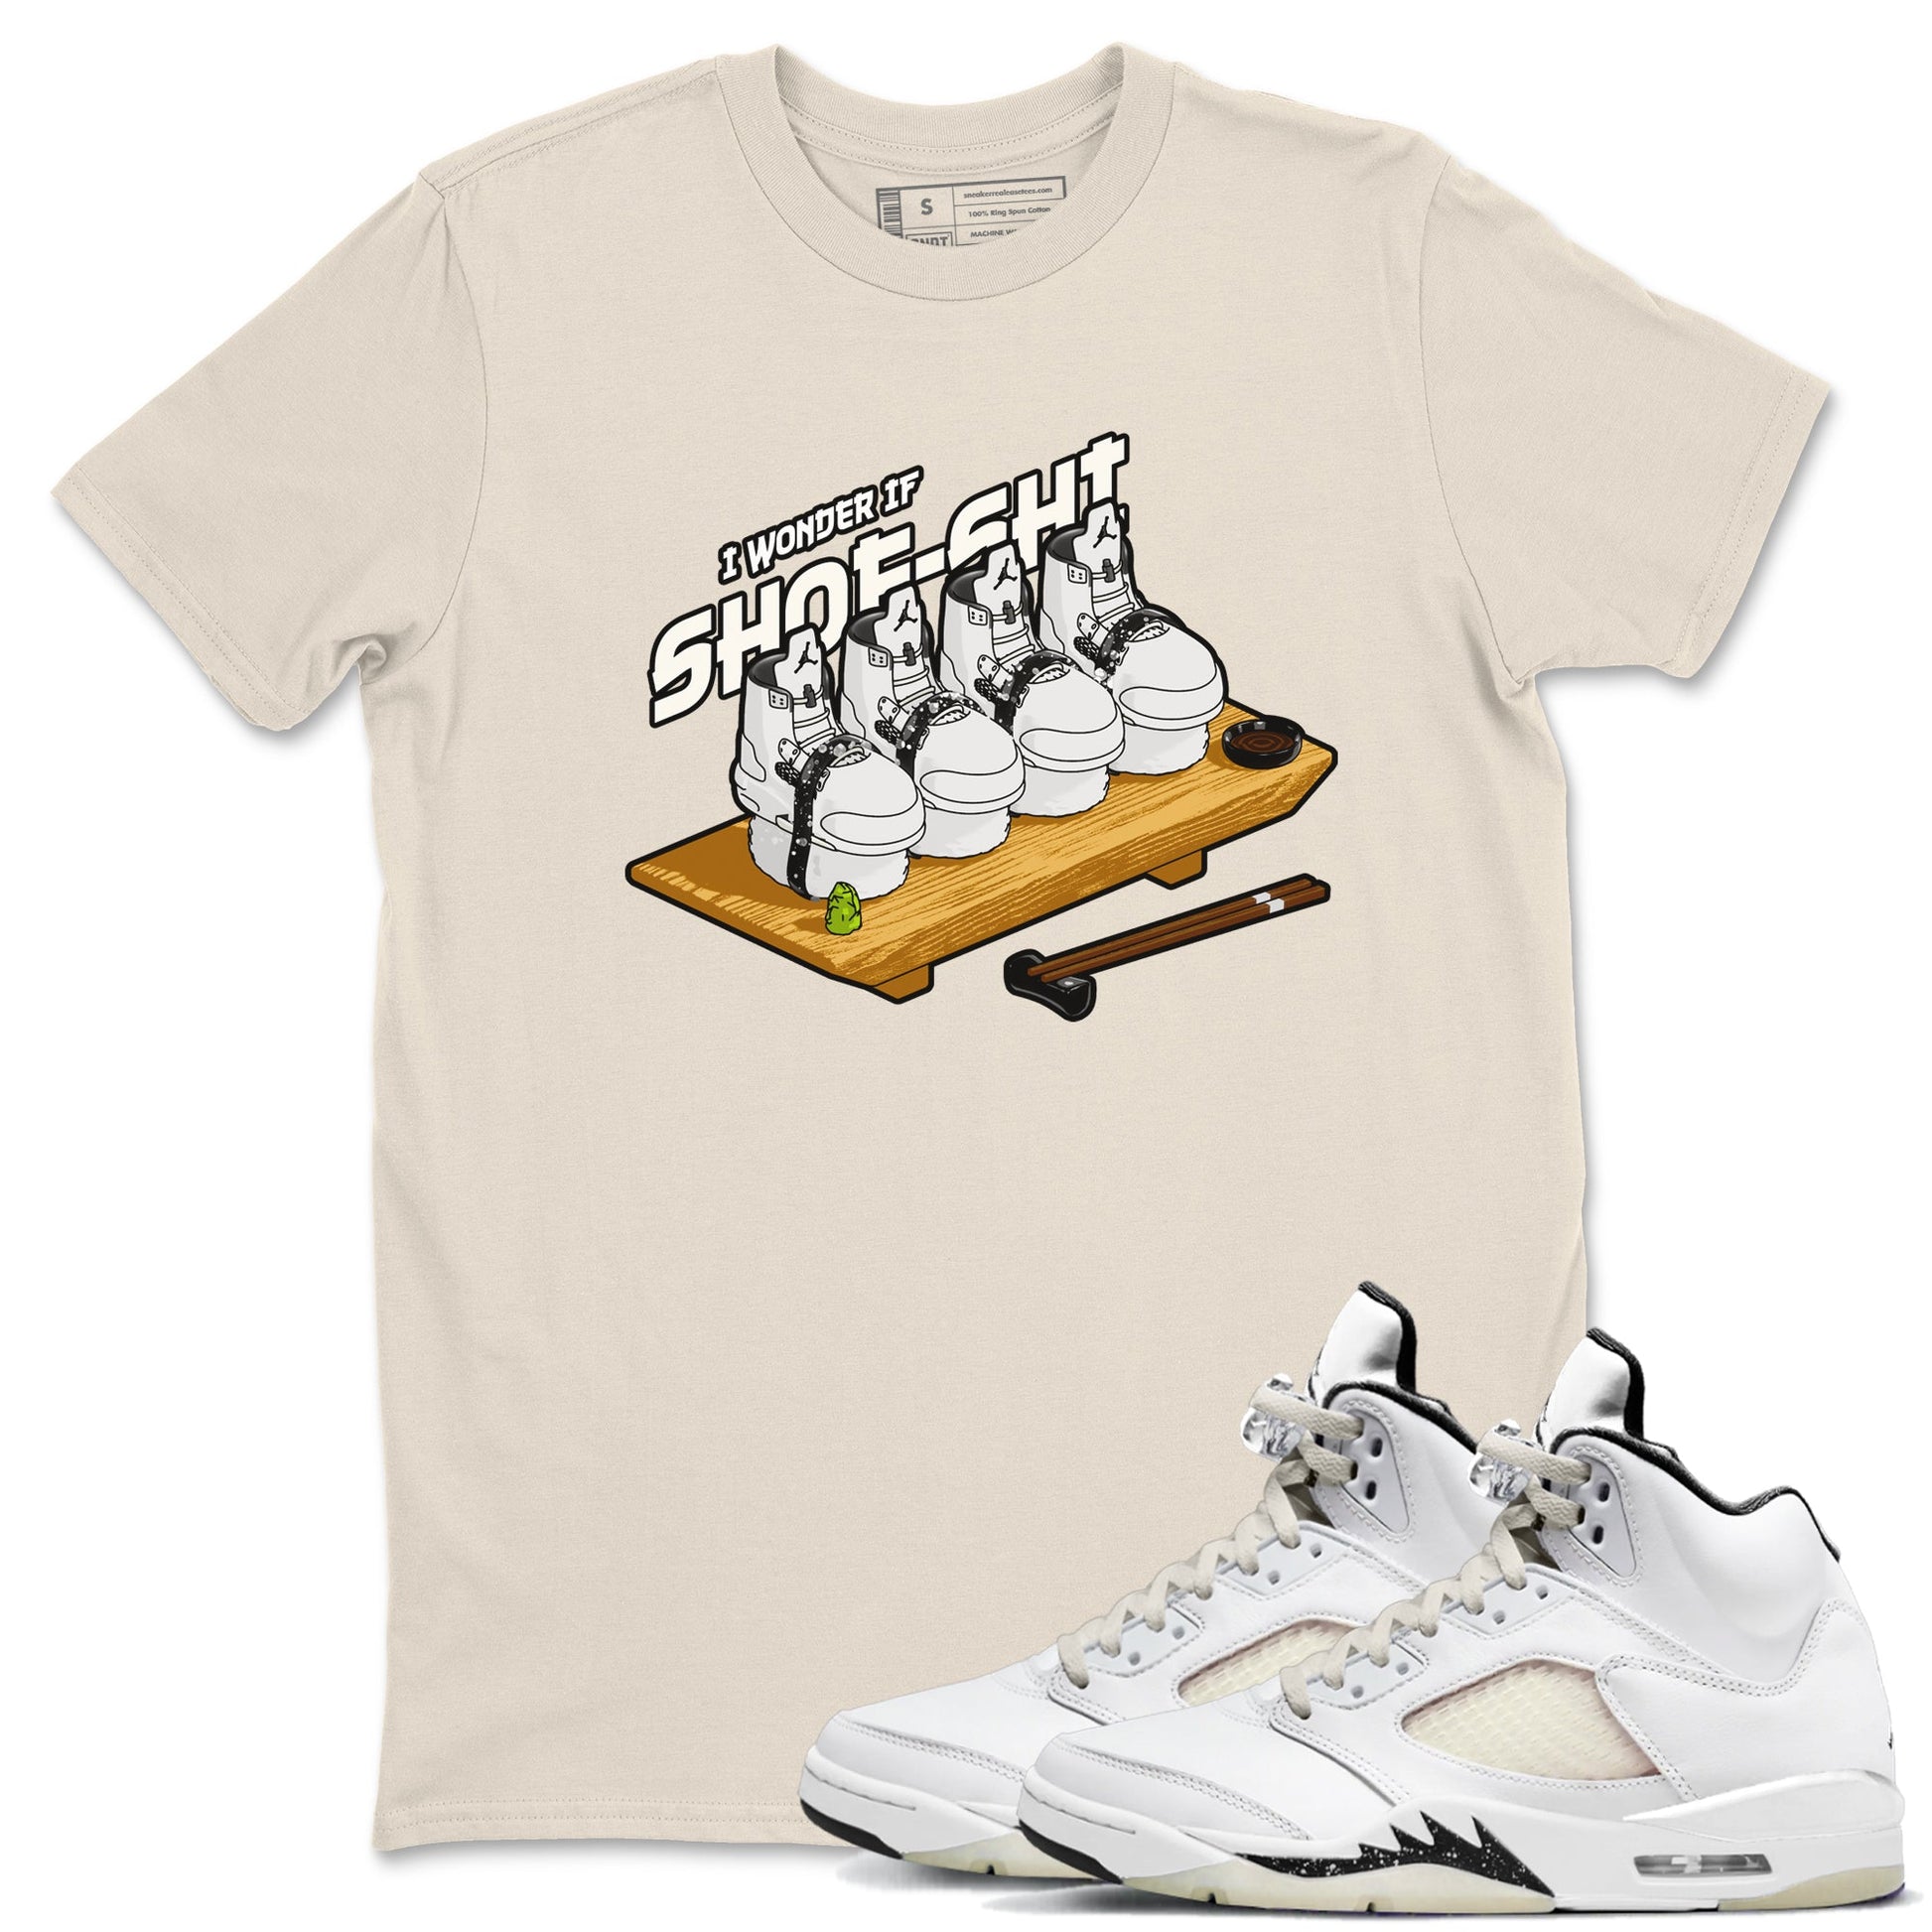 5s Sail shirt to match jordans Shoe-Shi sneaker tees Air Jordan 5 Sail SNRT Sneaker Release Tees unisex cotton Natural 1 crew neck shirt